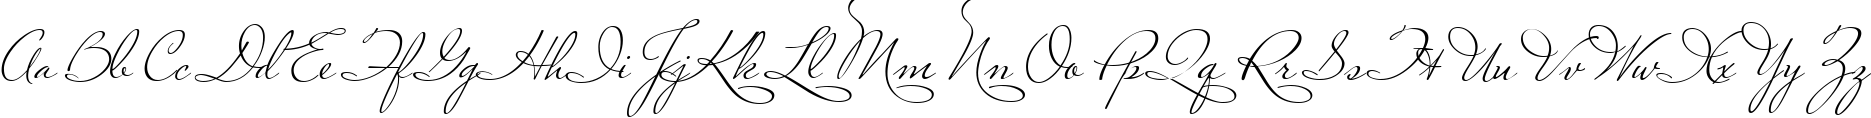 Пример написания английского алфавита шрифтом Marianna